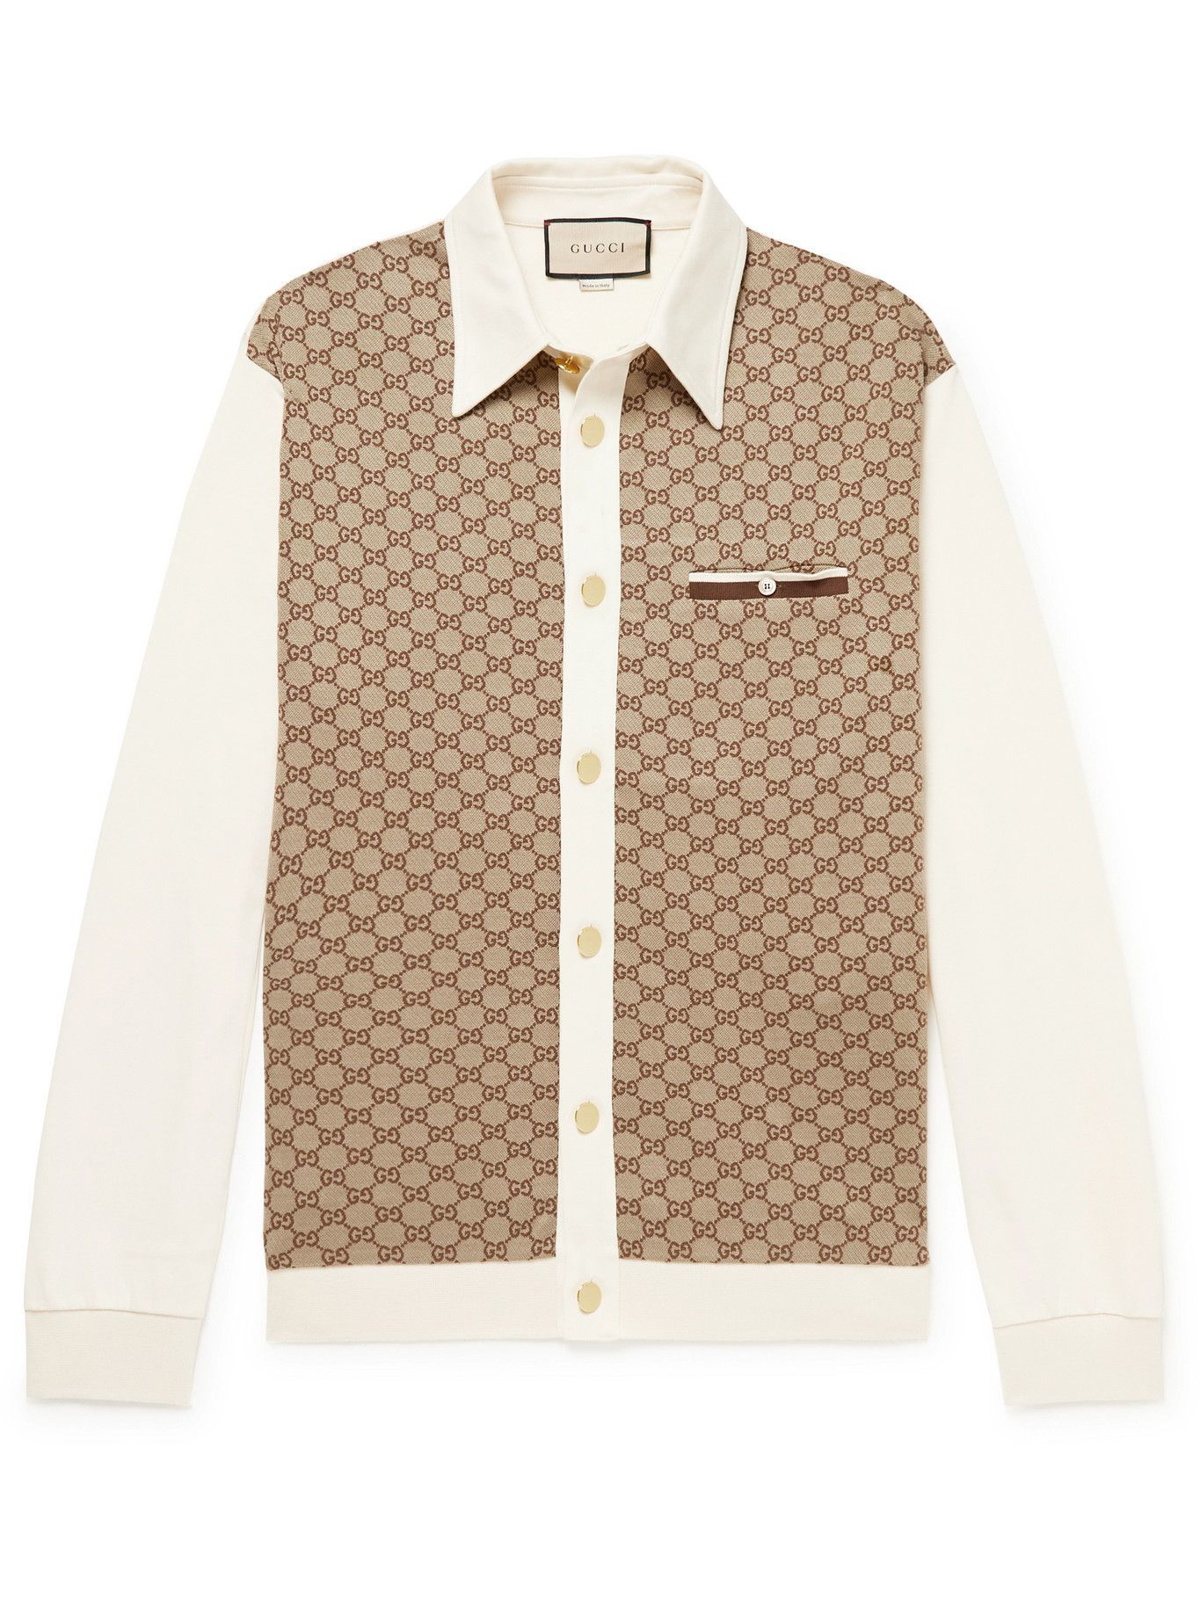 Gucci - Silk-satin Jacquard Shirt - Brown - IT40 - Net A Porter